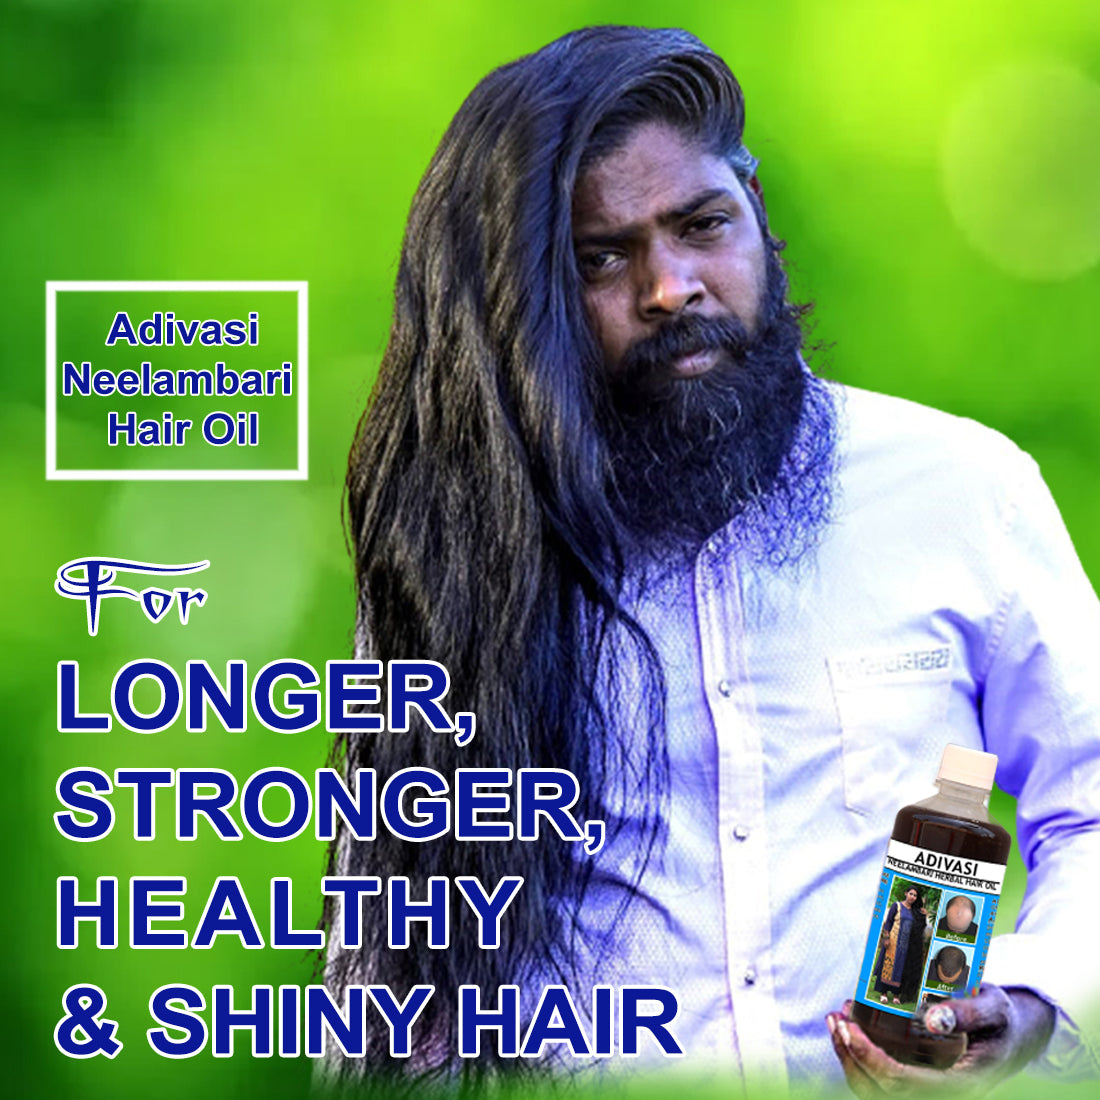 आदिवासी नीलांबरी हर्बल तेल की सच्चाई | Adivasi Neelambari Hair Oil Review:  Benefits, Side Effects - YouTube